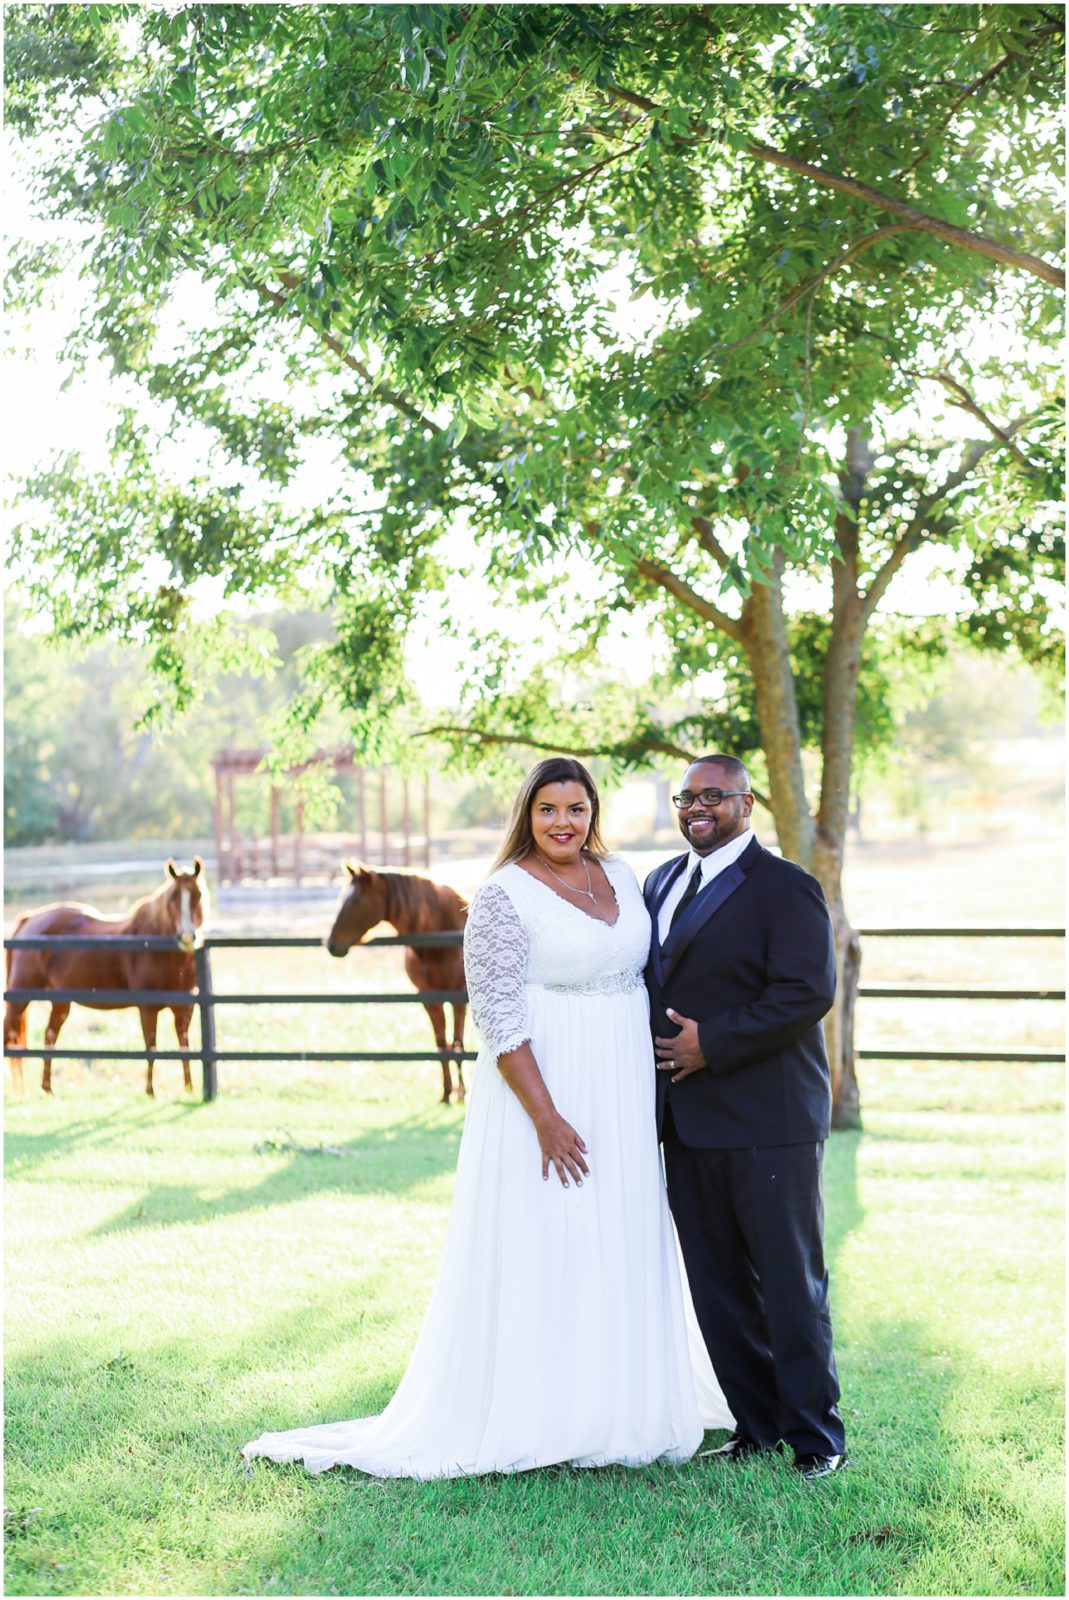 Tropical Wedding Details - Mariam Saifan Photography - Kansas City Overland Park Portrait and Wedding Photographer  Bride and Groom Portraits 